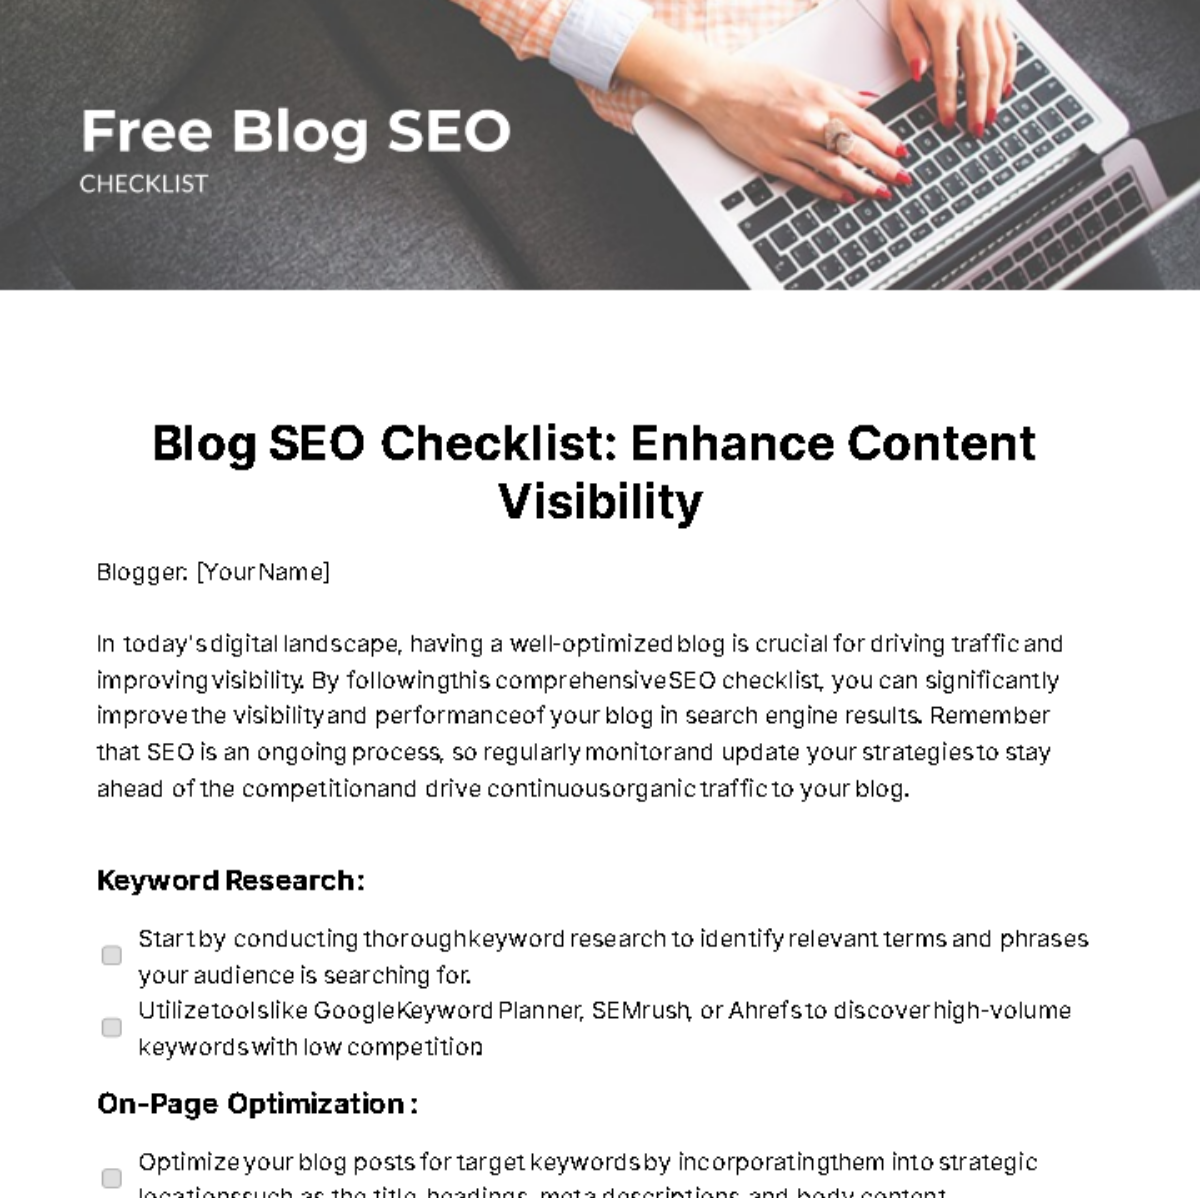 Free Blog SEO Checklist Template